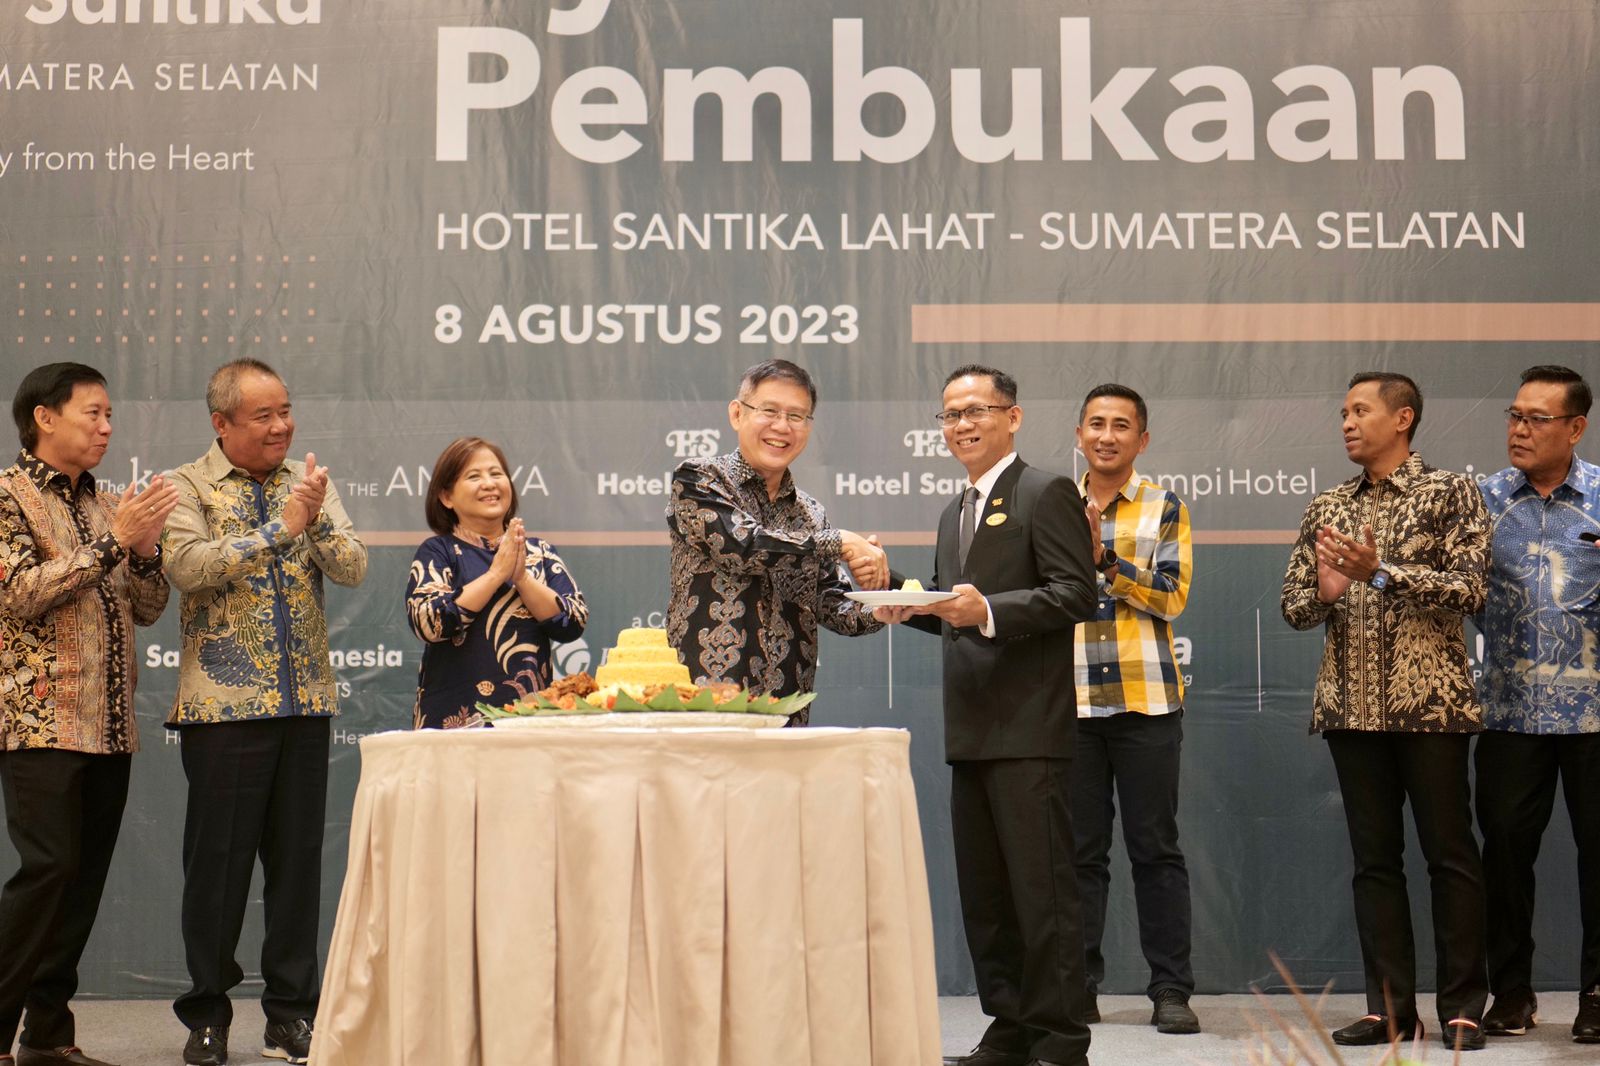 Hotel Santika Hadir di Lahat Sumatera Selatan, Lokasinya Tepat di Jantung Kota Lahat